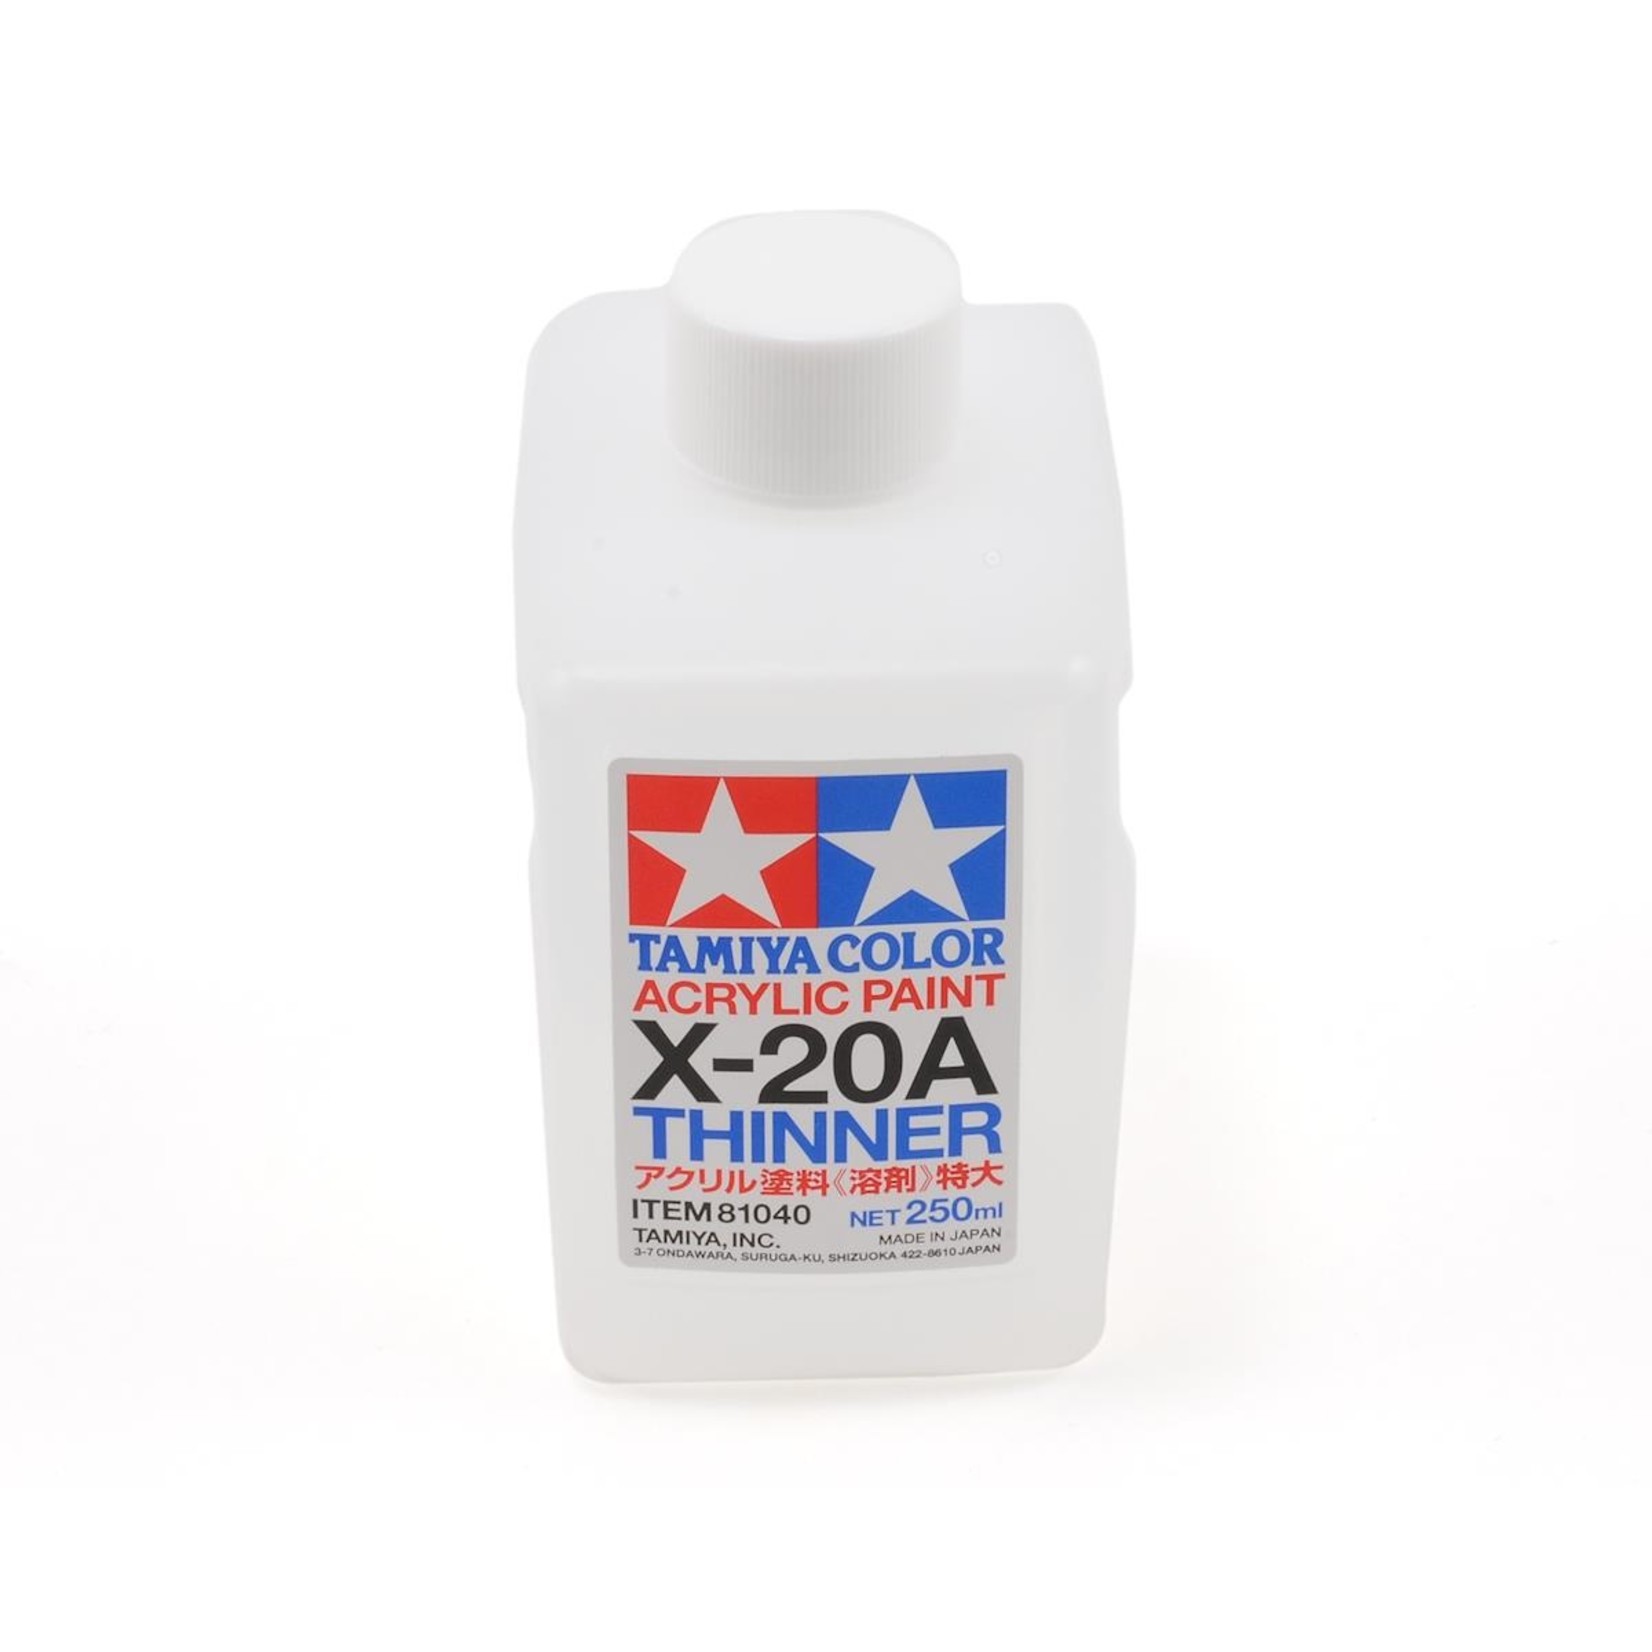 Tamiya Super Large Bottle Acrylic Paint, X-20A Thinner